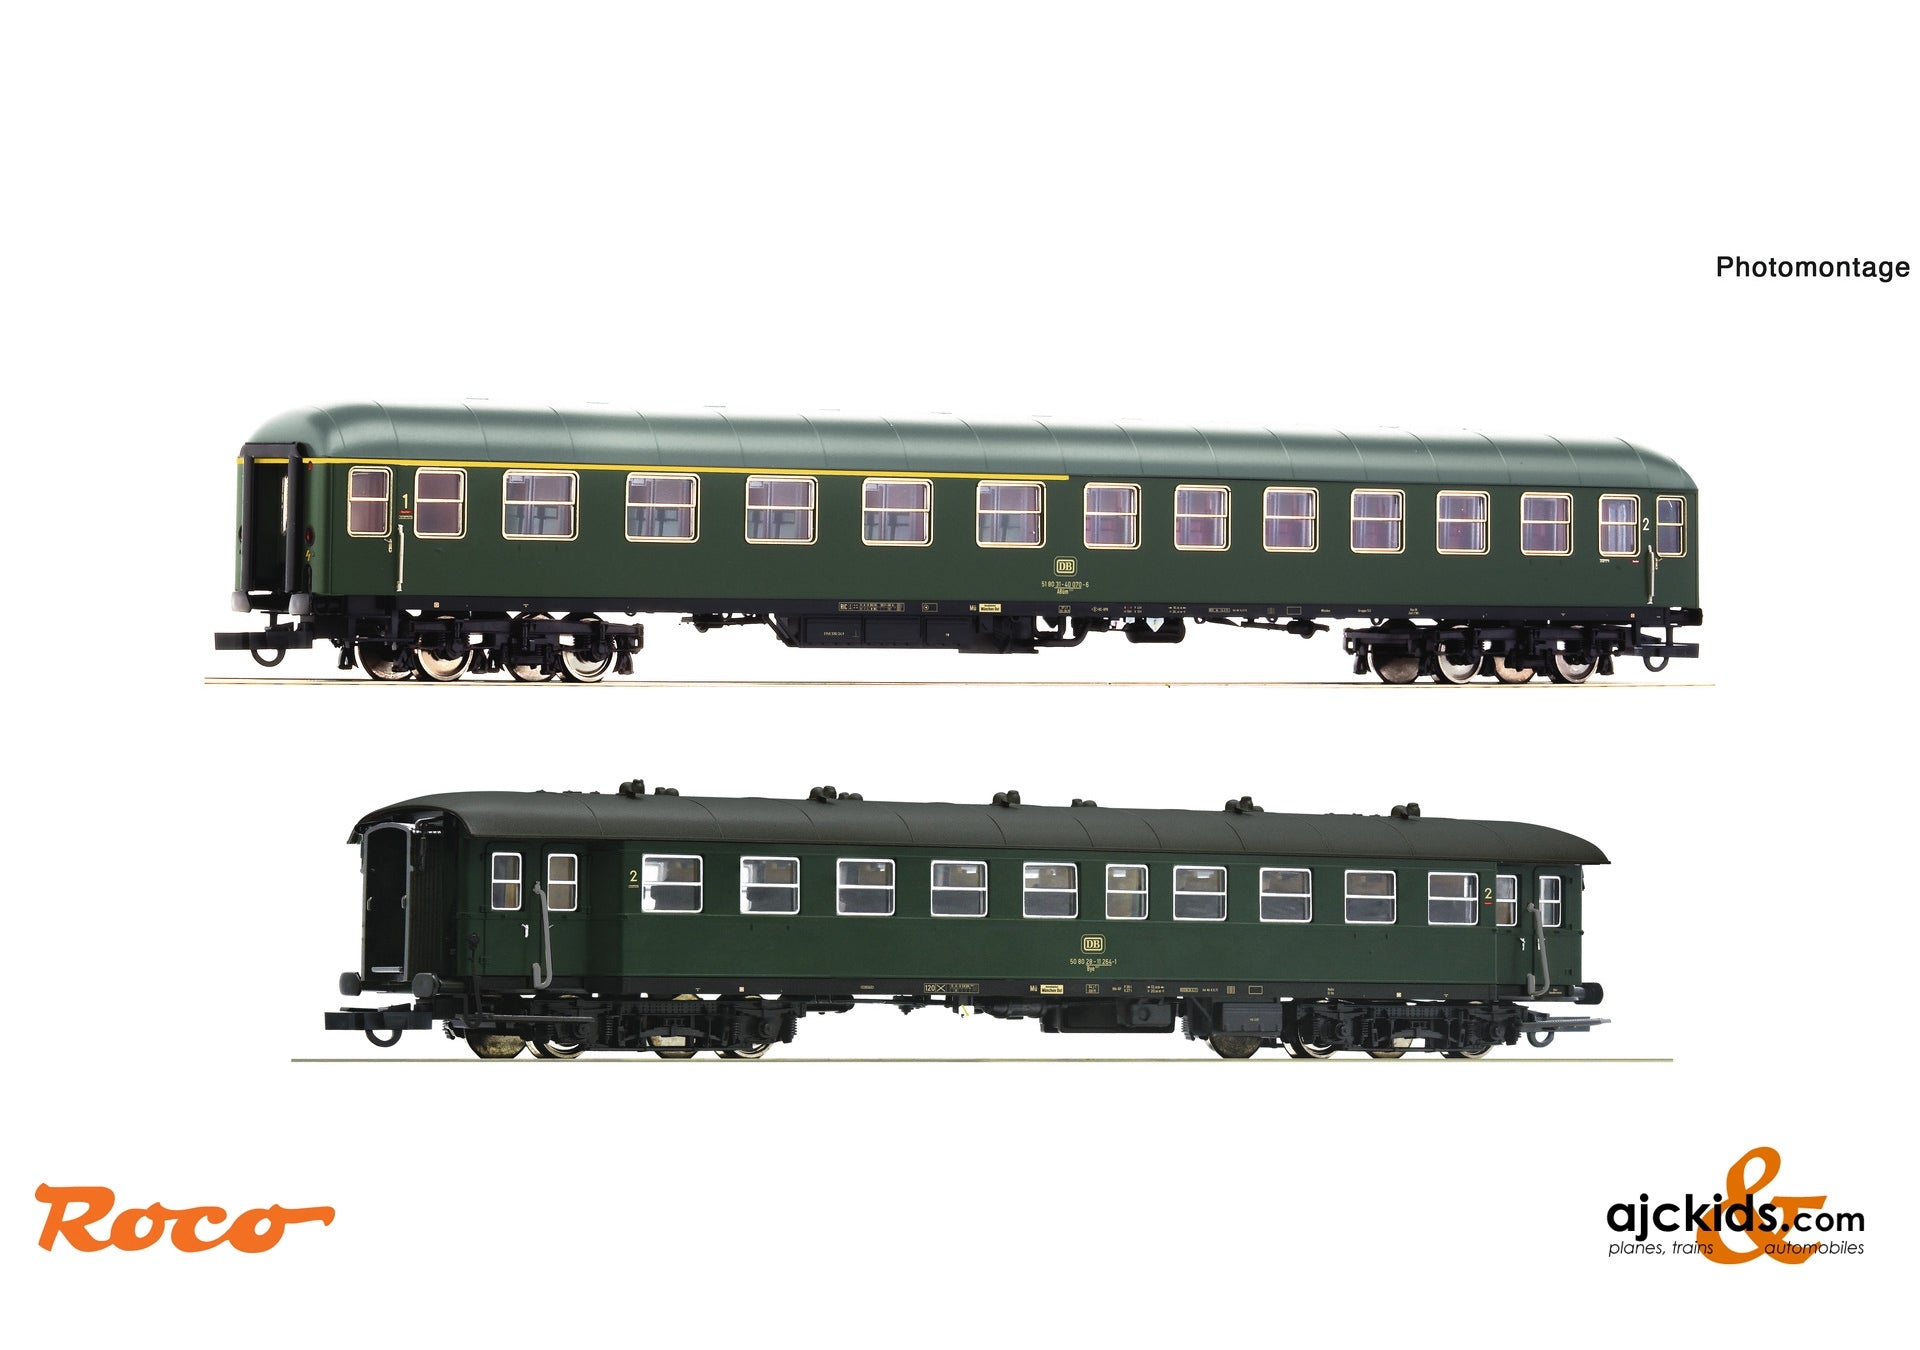 Roco 74011 - 2-piece set 2: “Personenzug Freilassing” (Passenger train Freilassing), DB at Ajckids.com